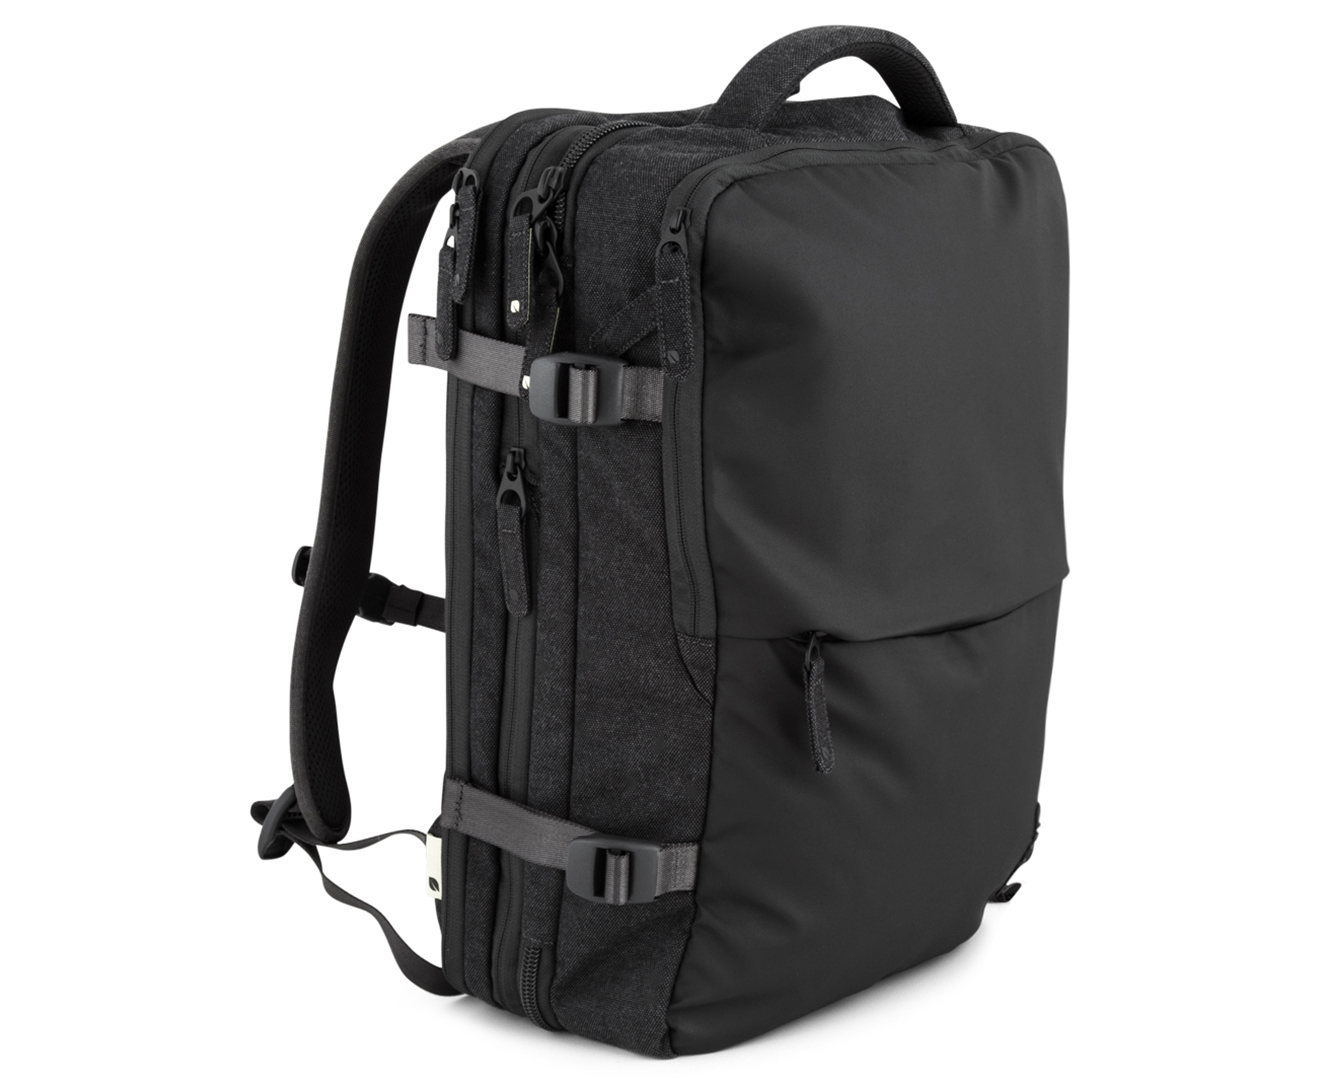 Incase EO Travel Backpack - Black | Catch.com.au